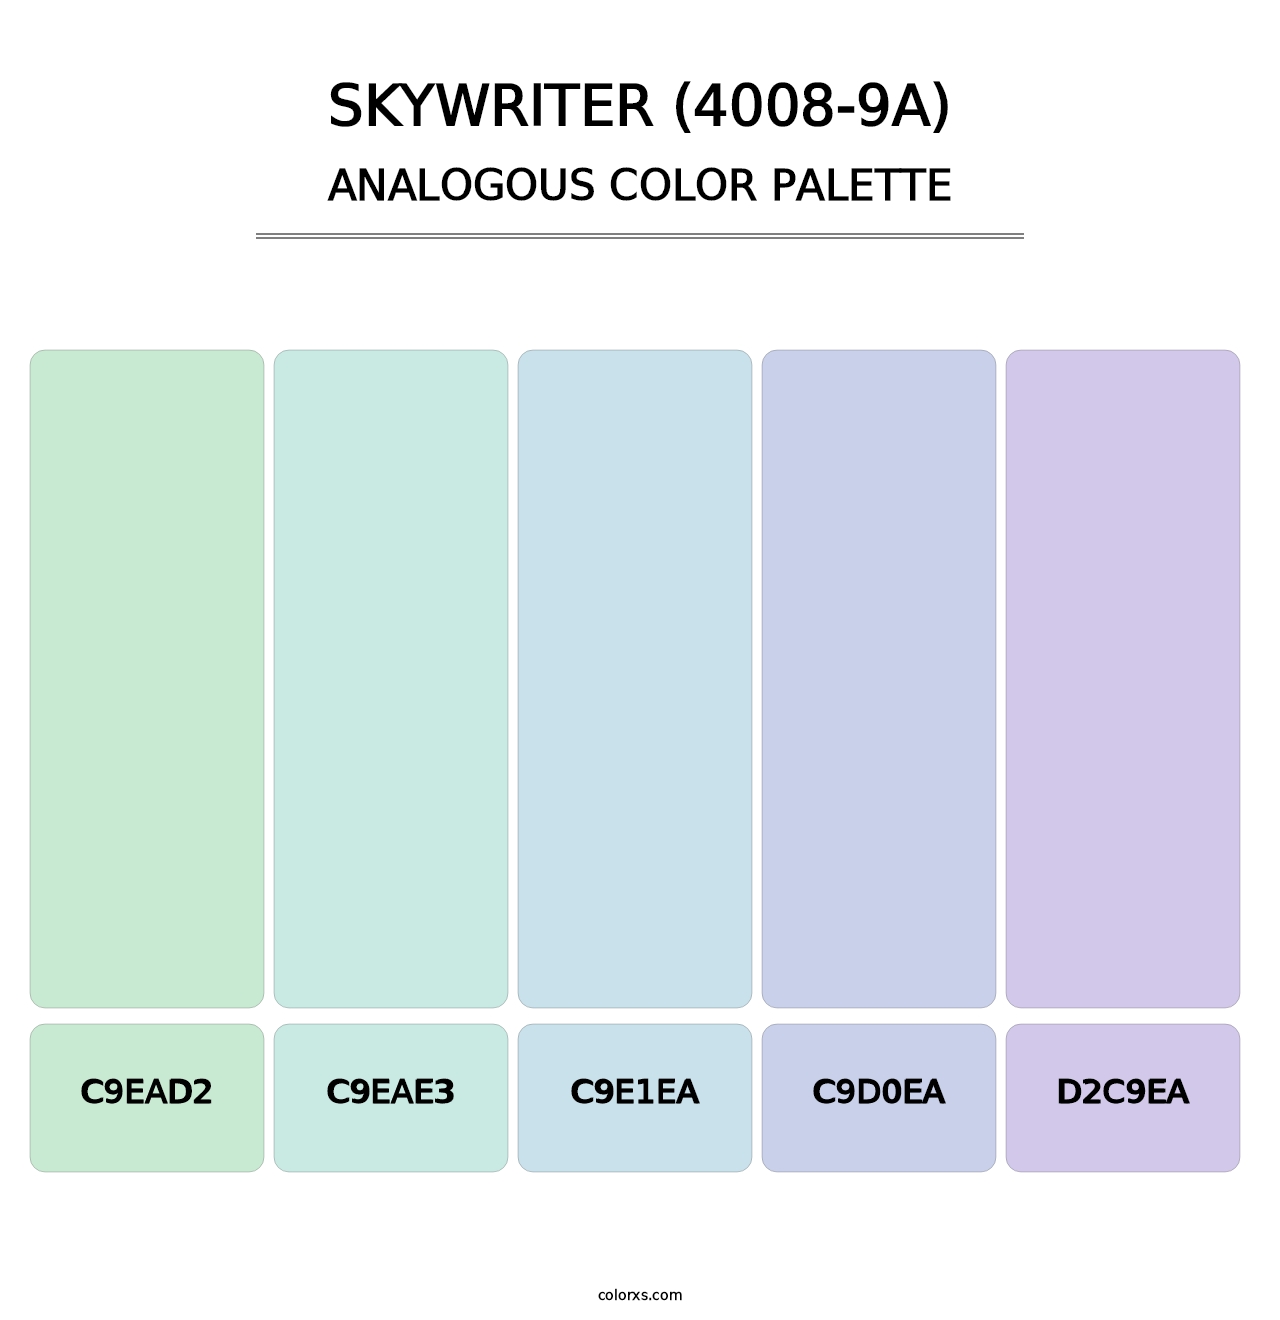 Skywriter (4008-9A) - Analogous Color Palette